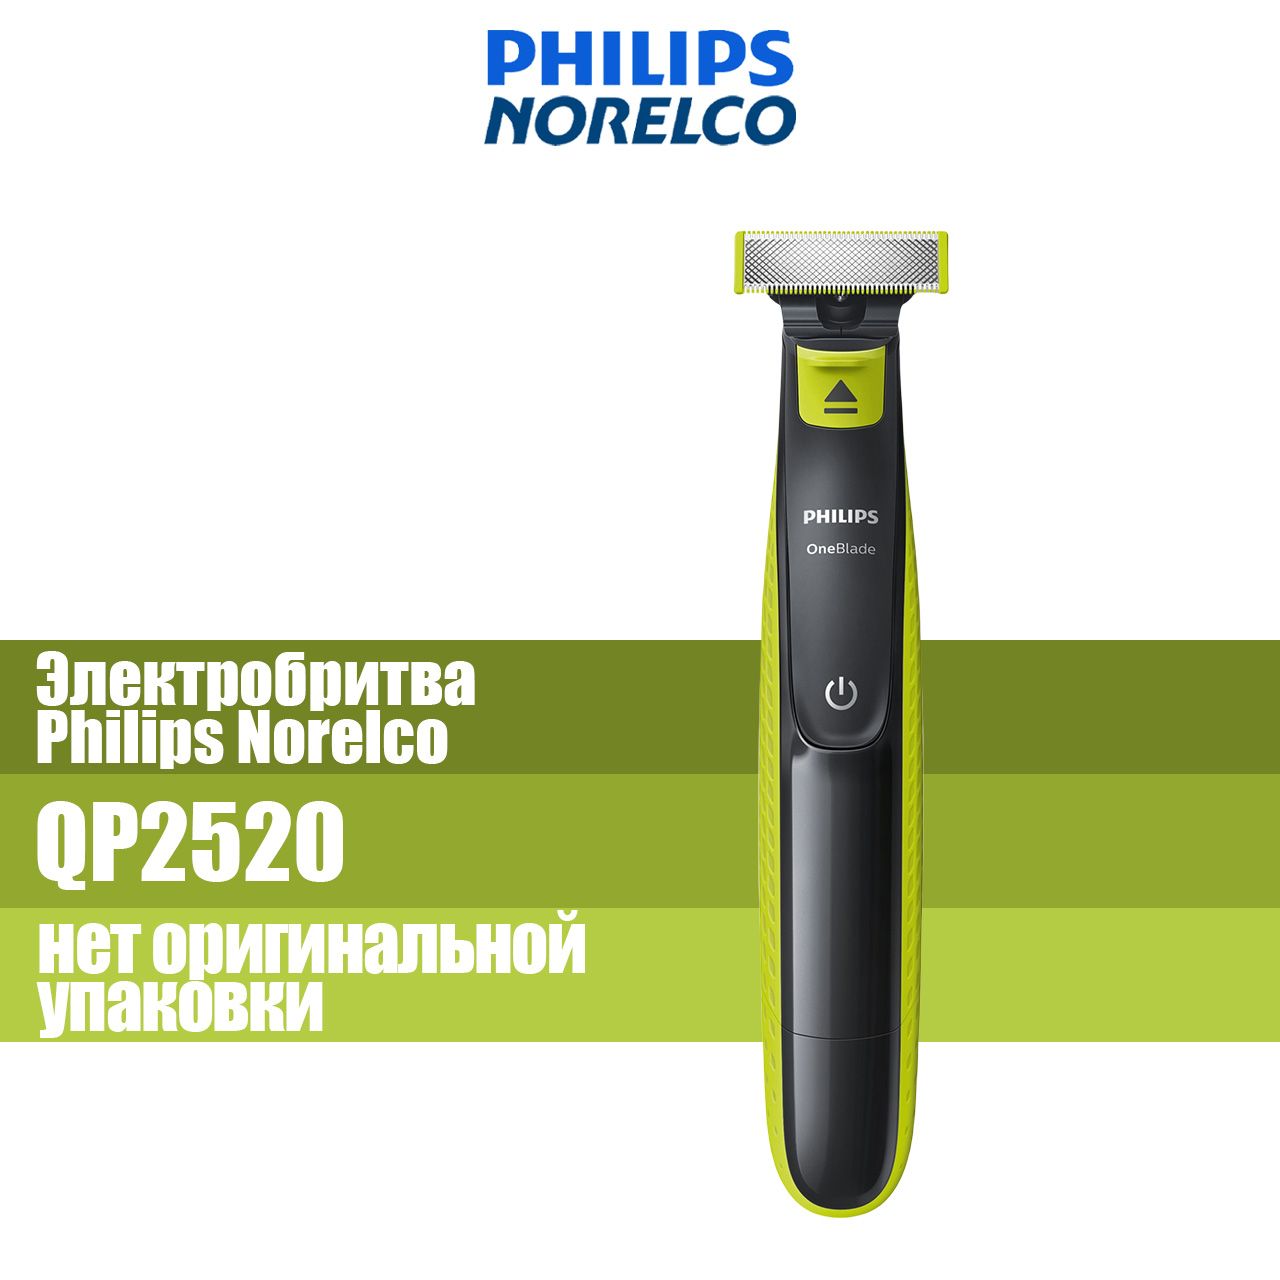 PhilipsЭлектробритватриммерphilipsNorelcoOneBladeQP2520длямужчин,черный,зеленый